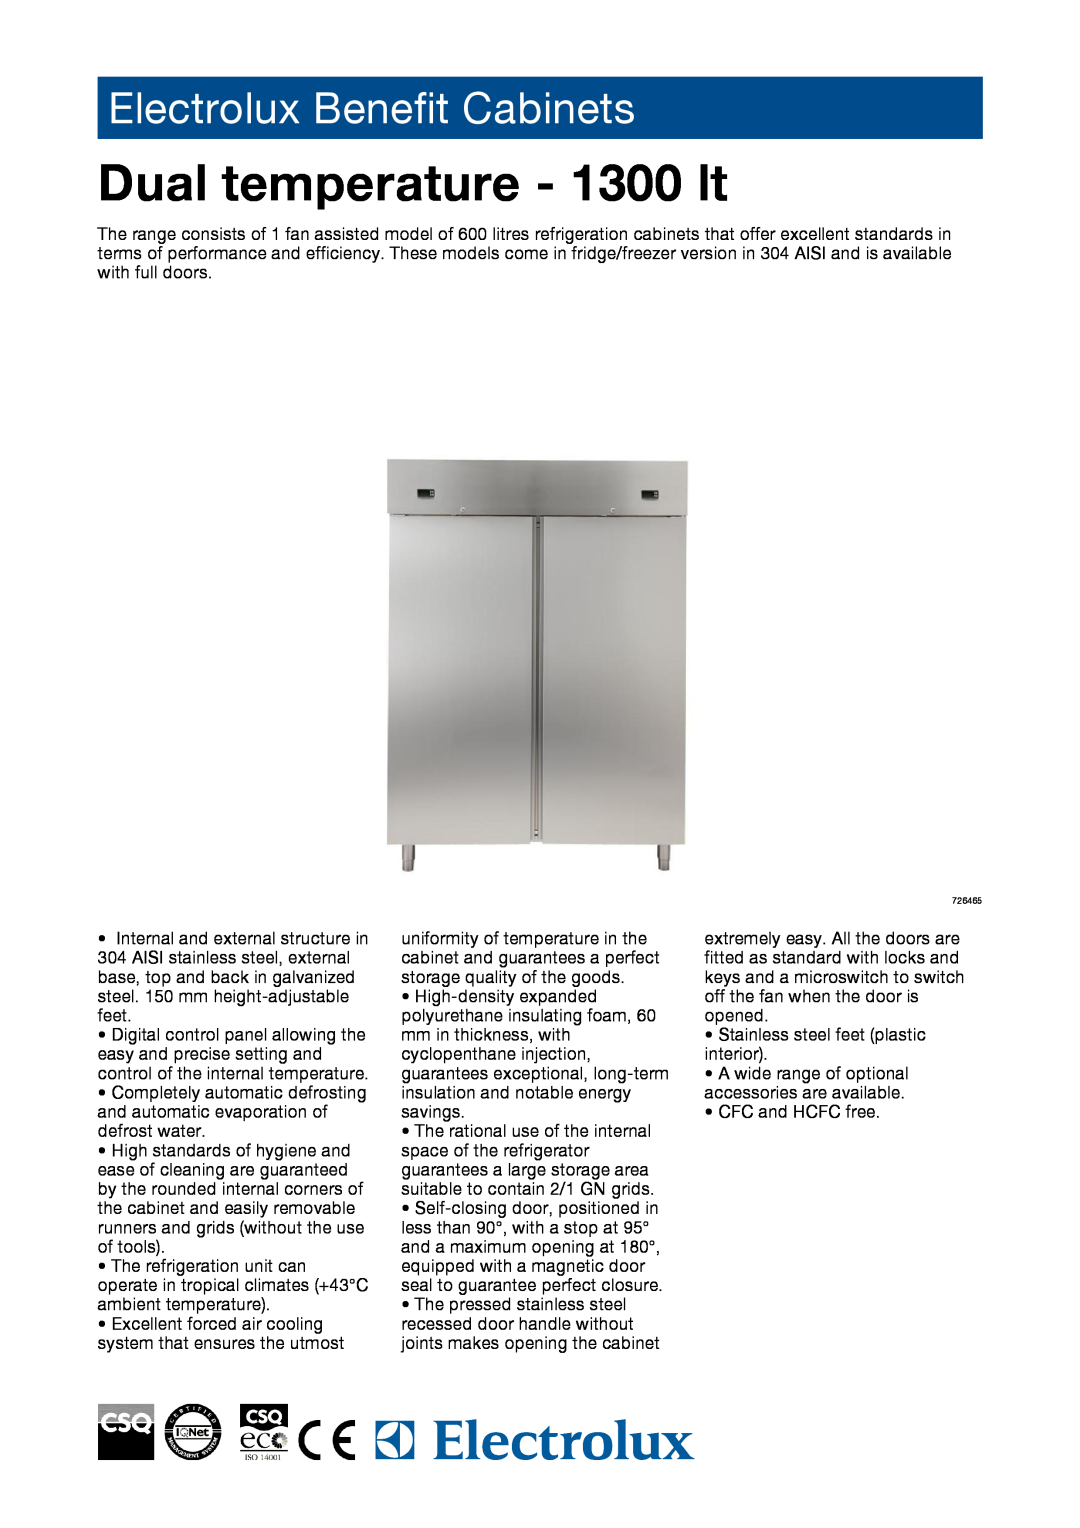 Electrolux RS13DFX2F, 726465 manual Dual temperature - 1300 lt, Electrolux Benefit Cabinets 